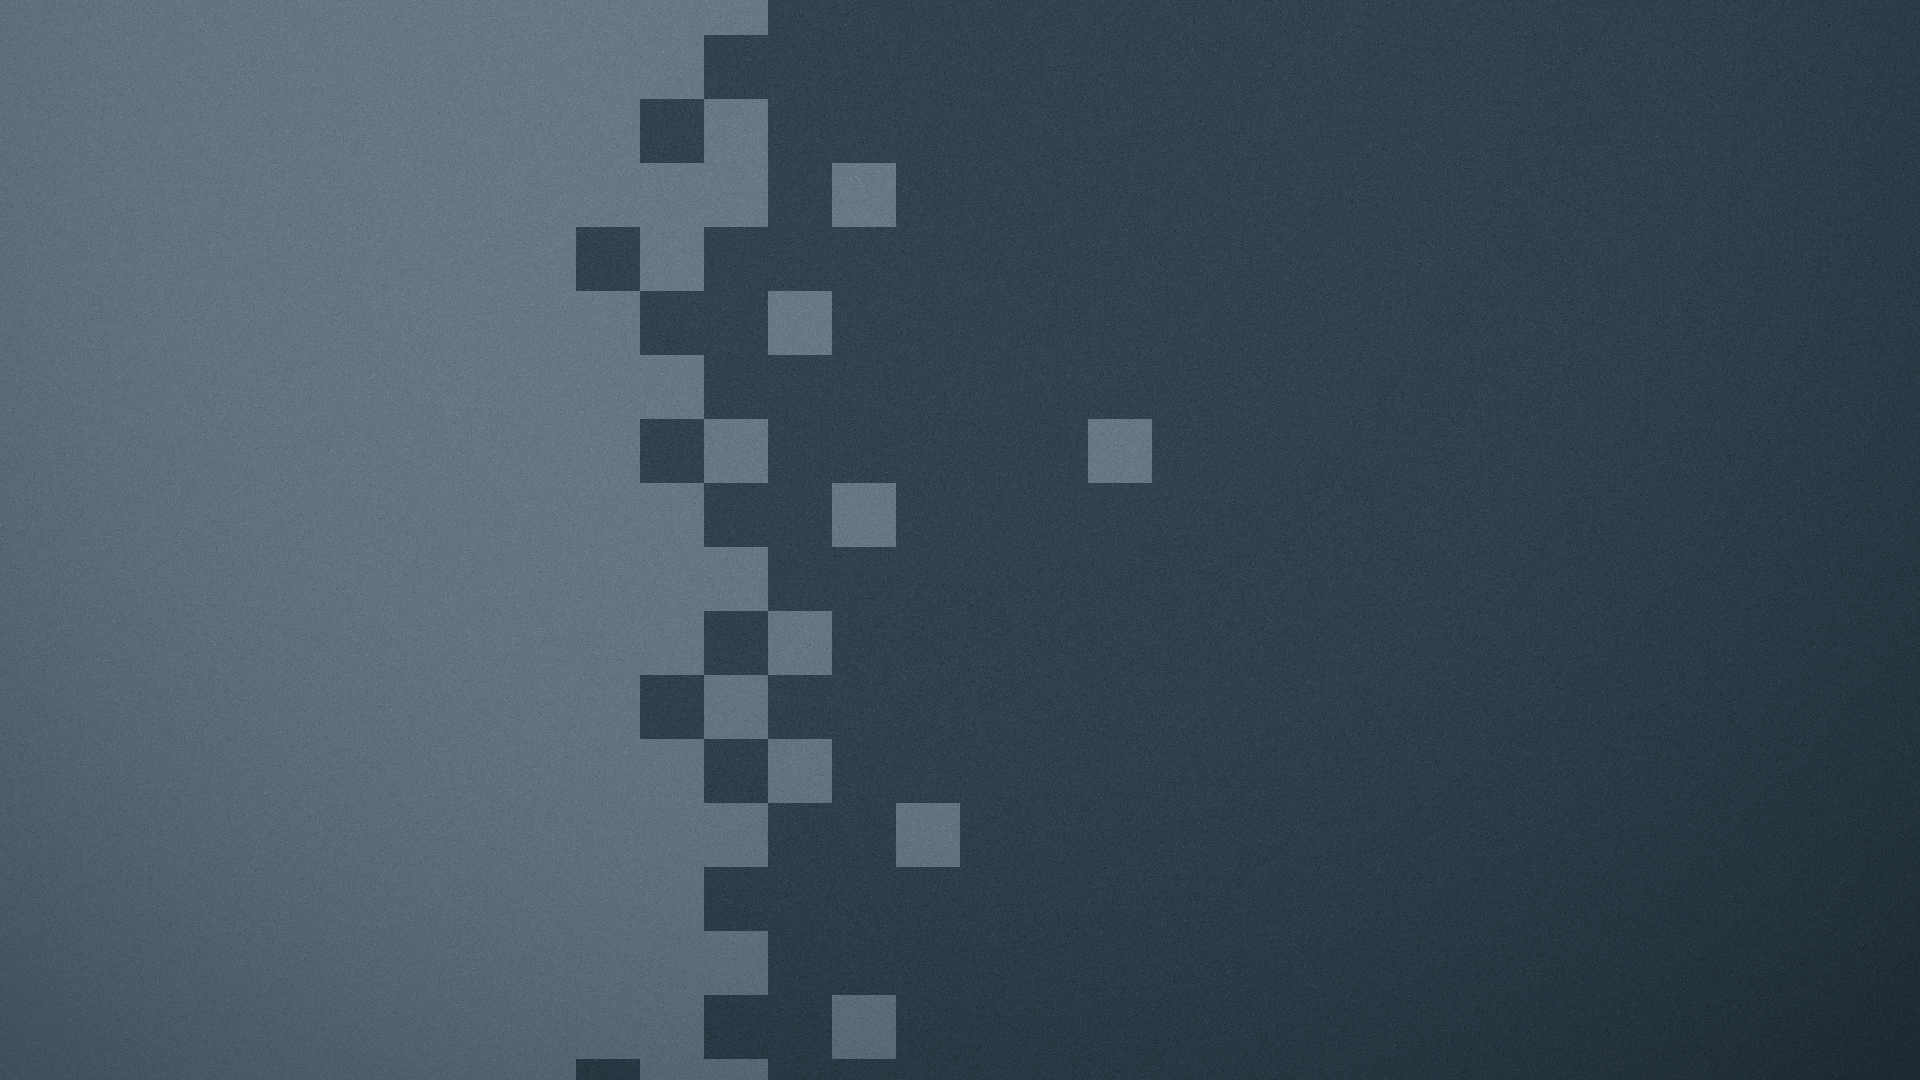 Abstract pixels 2 wallpaper 1080p by DanielThorndyke on DeviantArt